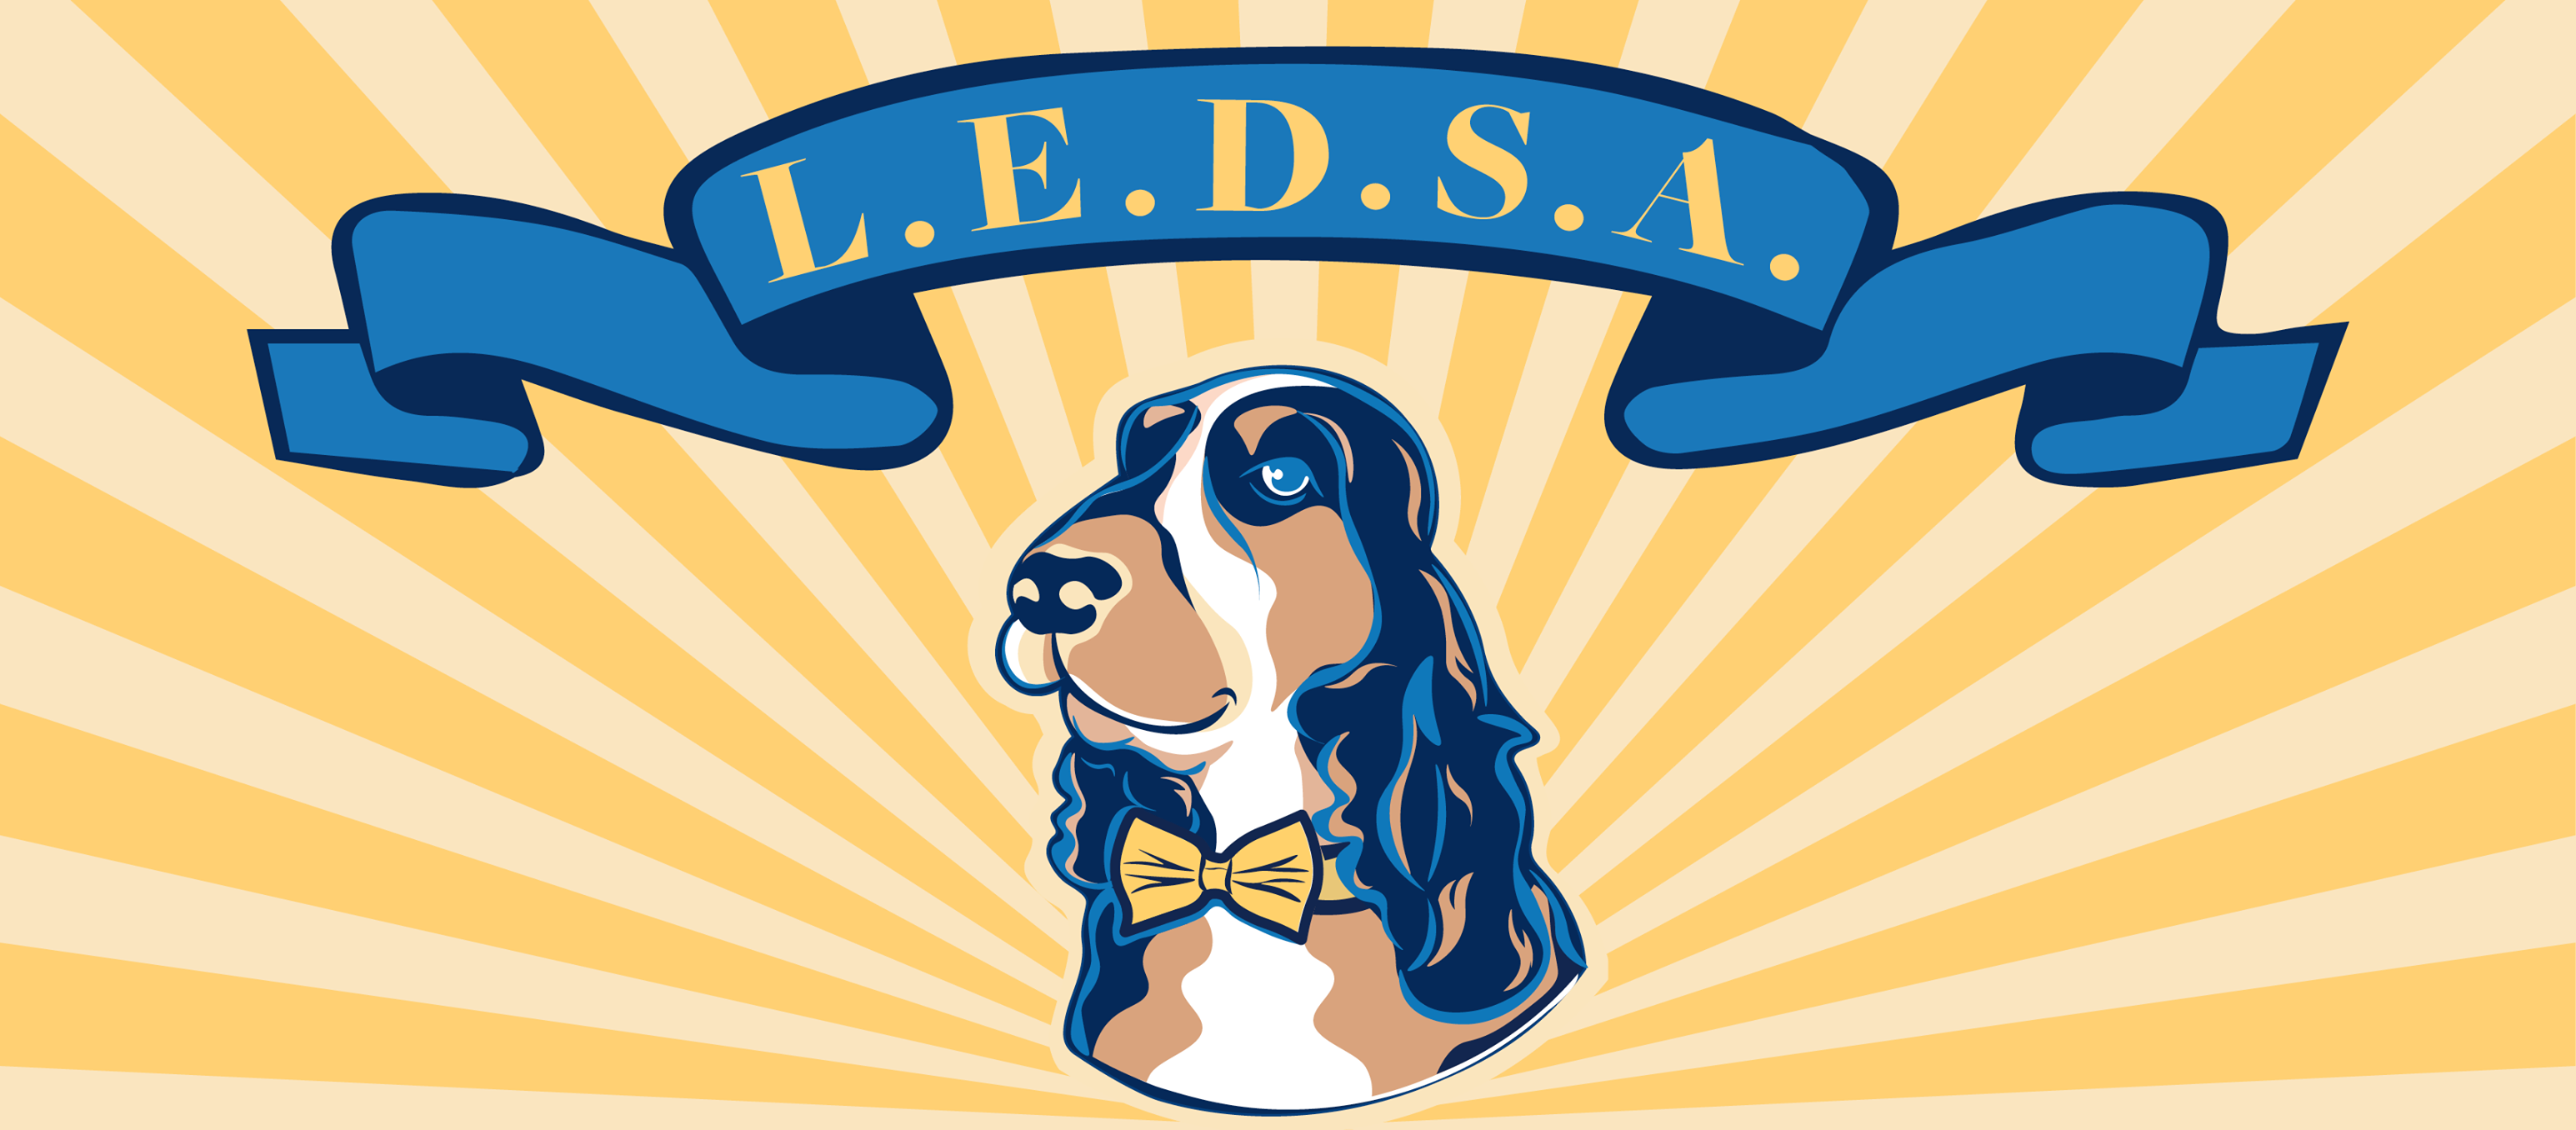 Leading Edge Dog Show Academy